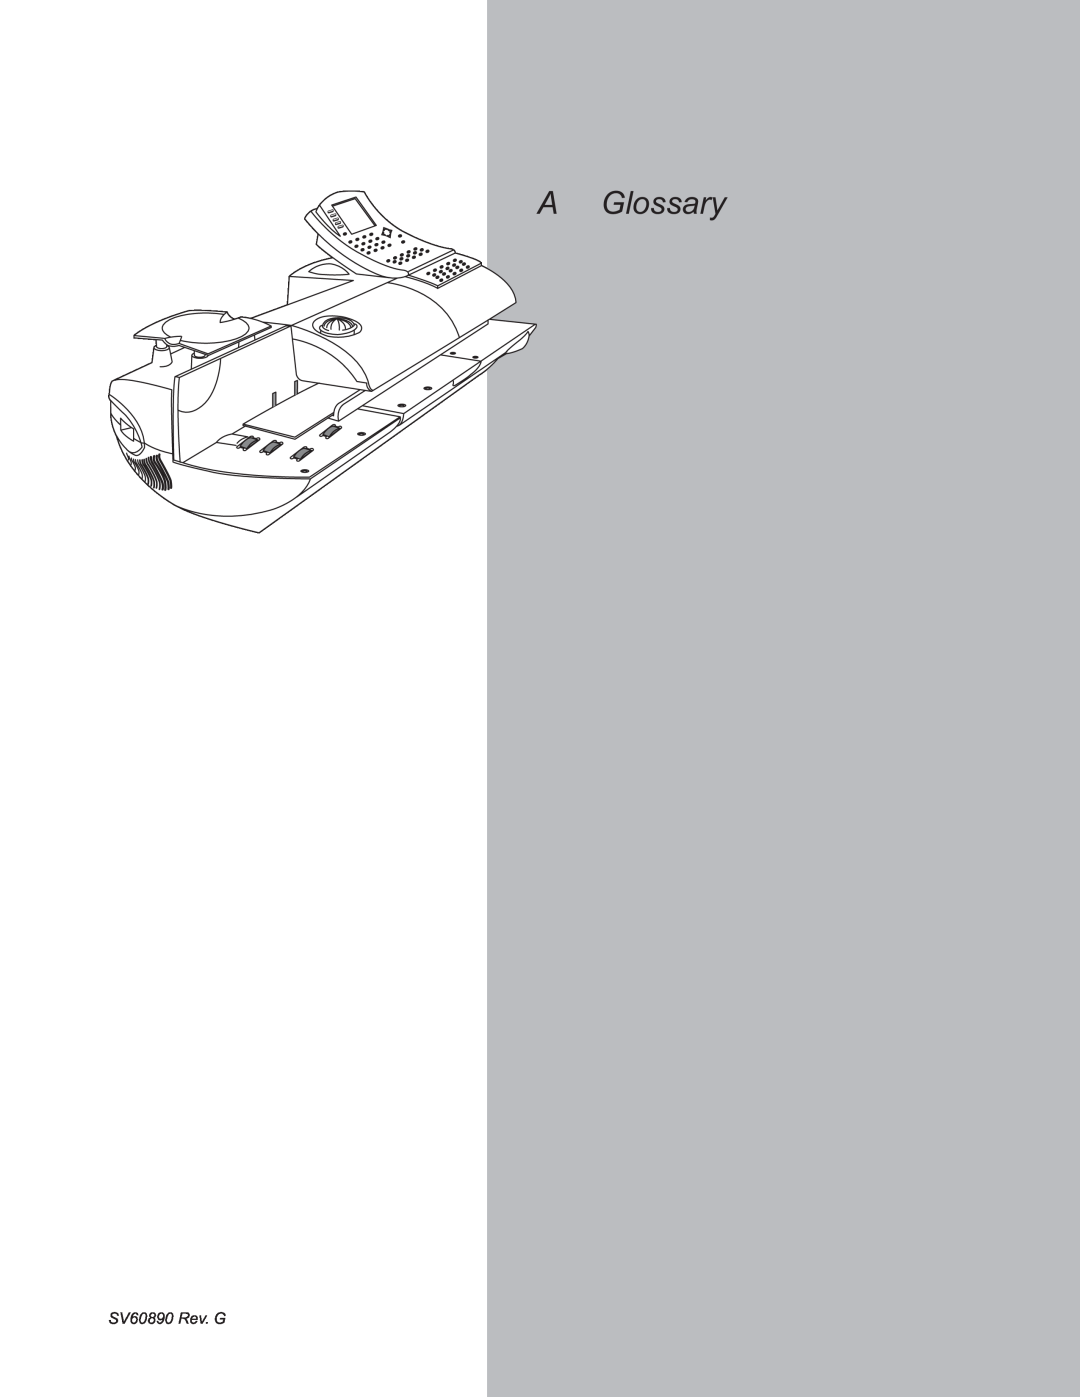 Pitney Bowes DM500, DM550 manual A Glossary, SV60890 Rev. G 